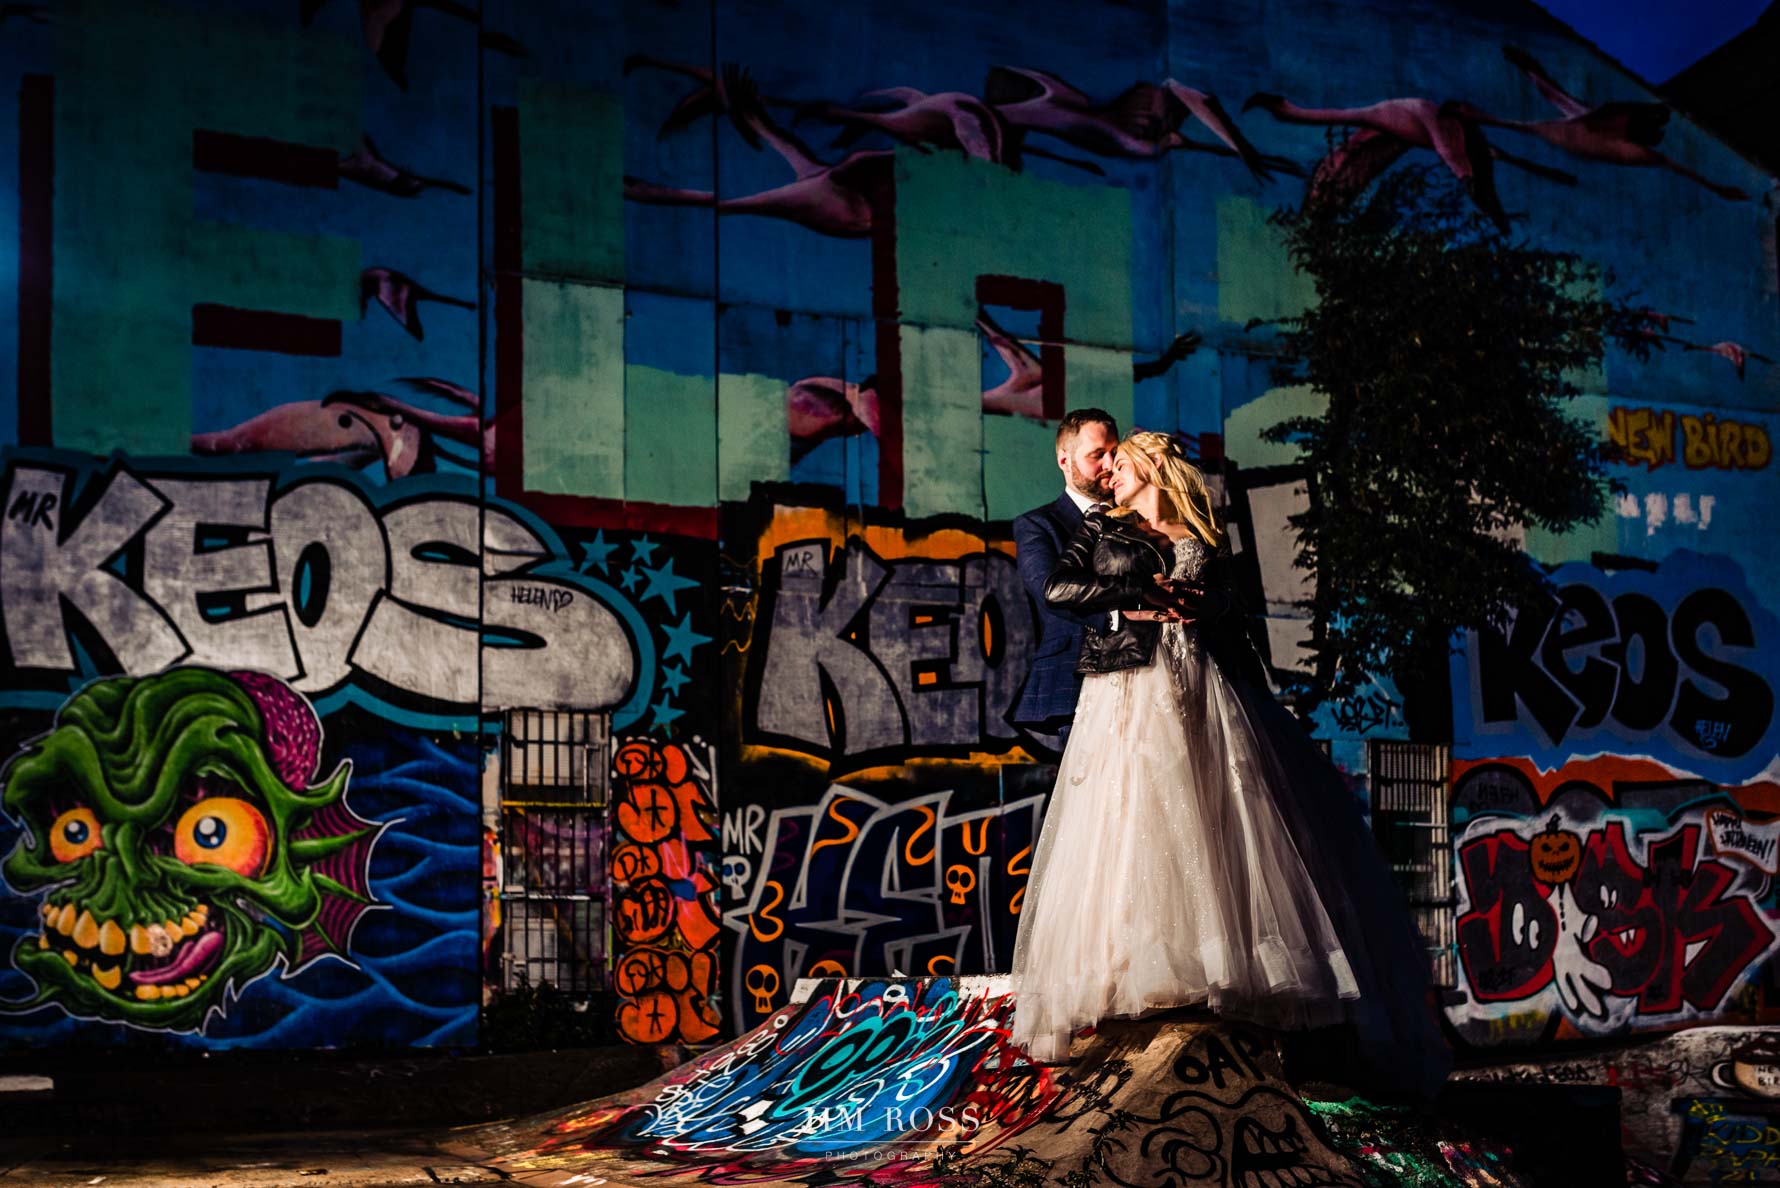 Spoons pose for flash-lit couple in graffiti skate park